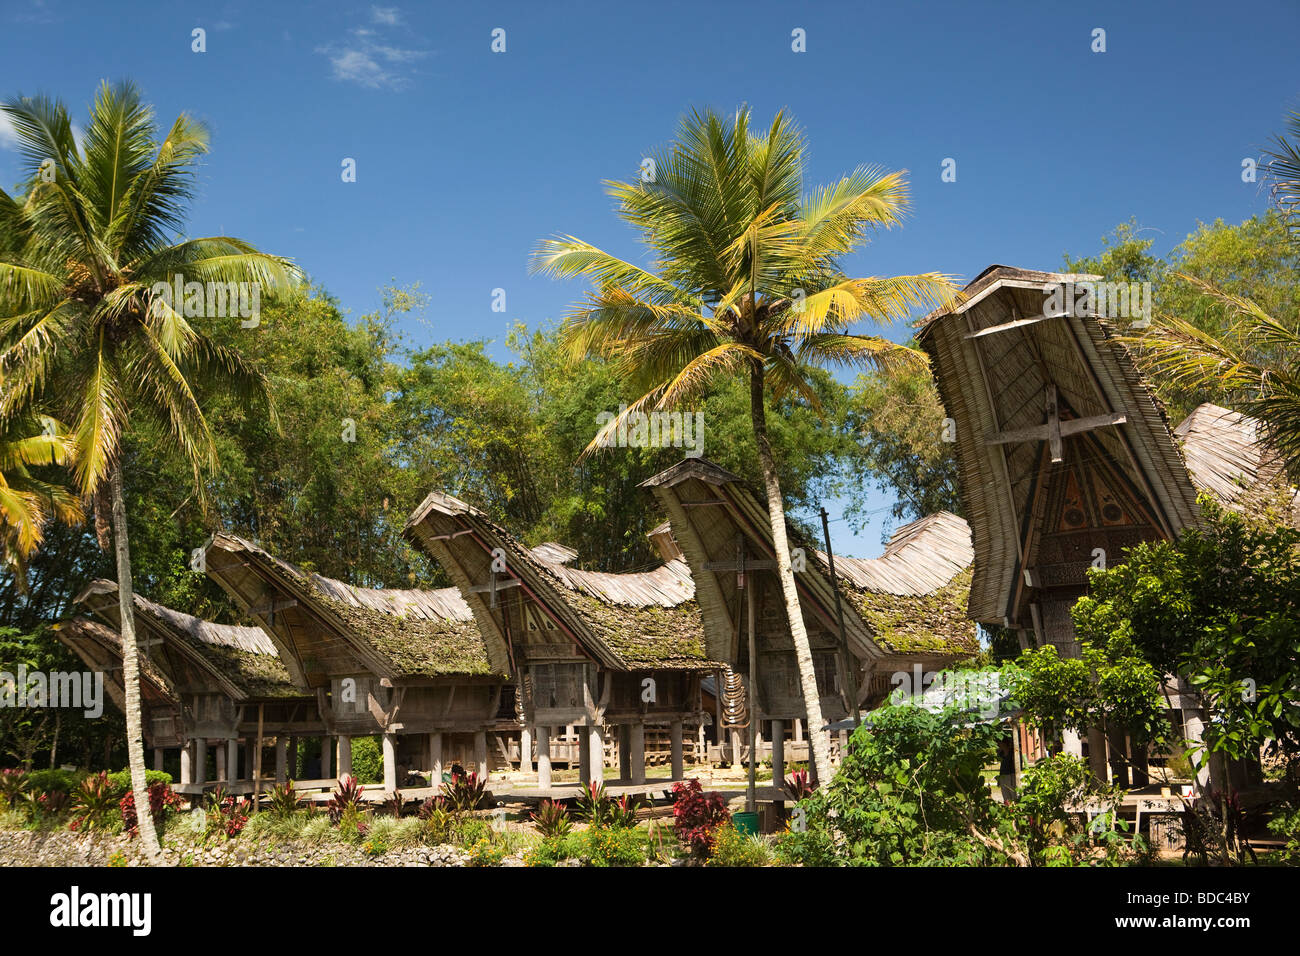 Indonesien Sulawesi Tana Toraja Kete Kesu traditionelle Tongkonan Häuser und Scheunen Reis Stockfoto